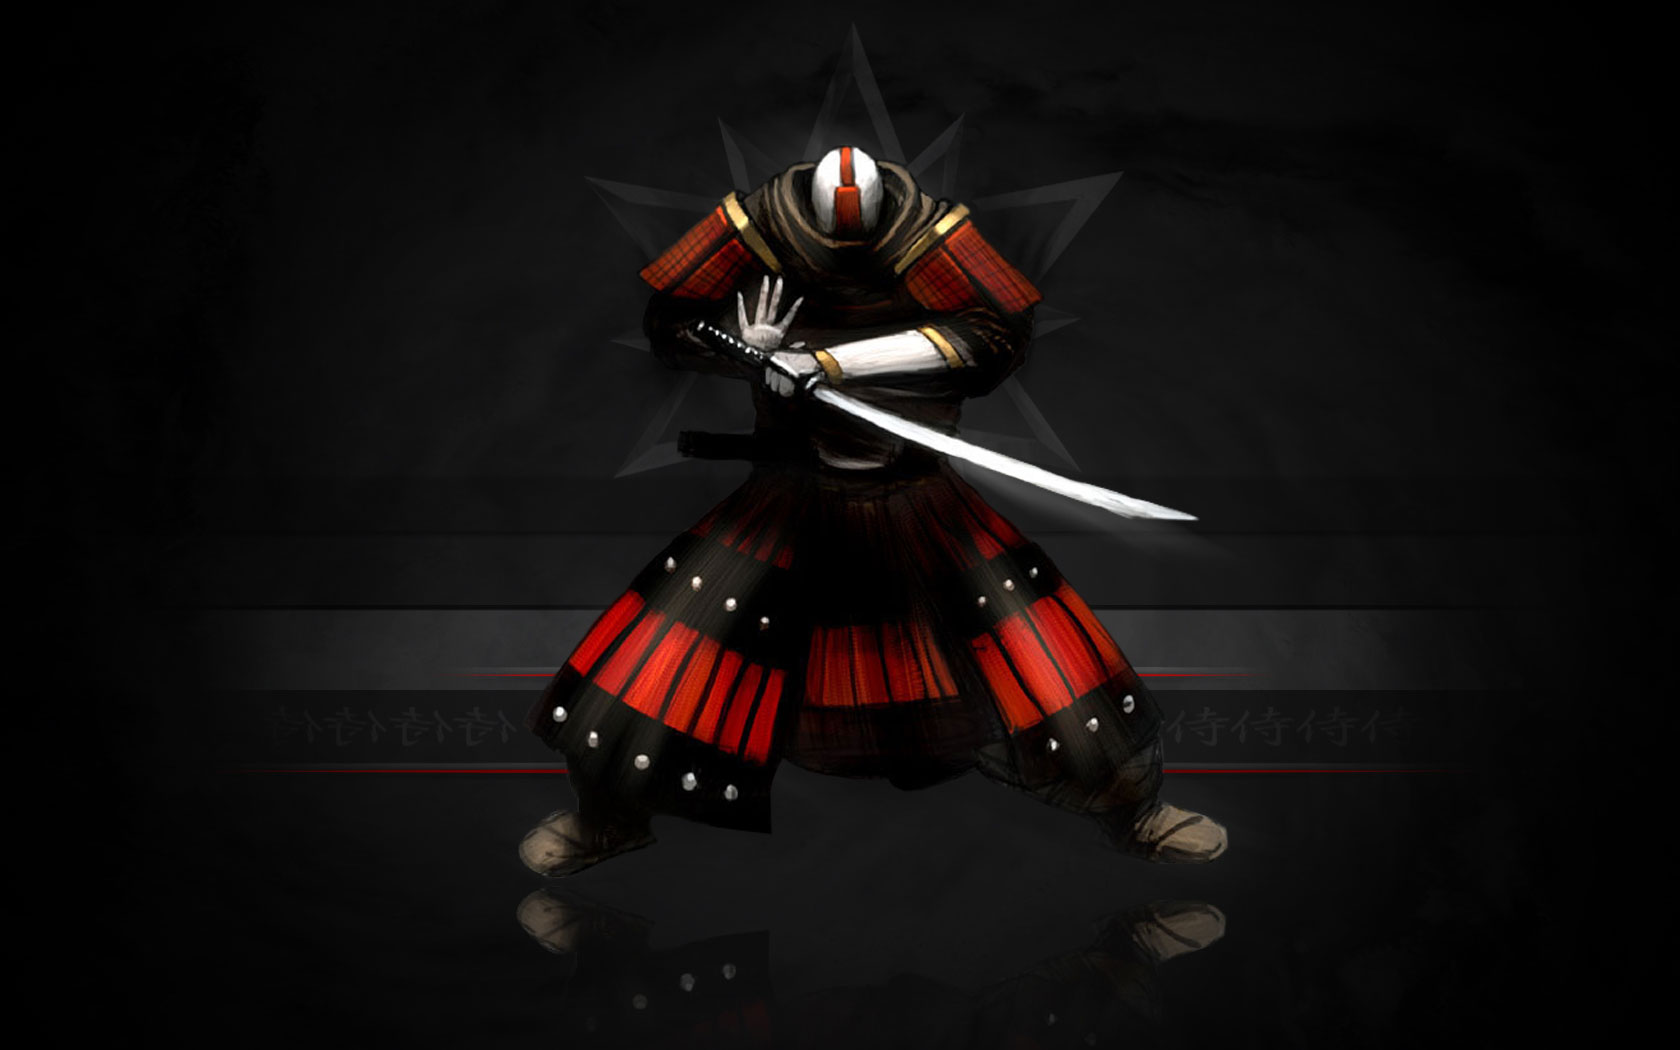 Wallpapers Skeleton Free Samurai Warrior 1680x1050 #skeleton